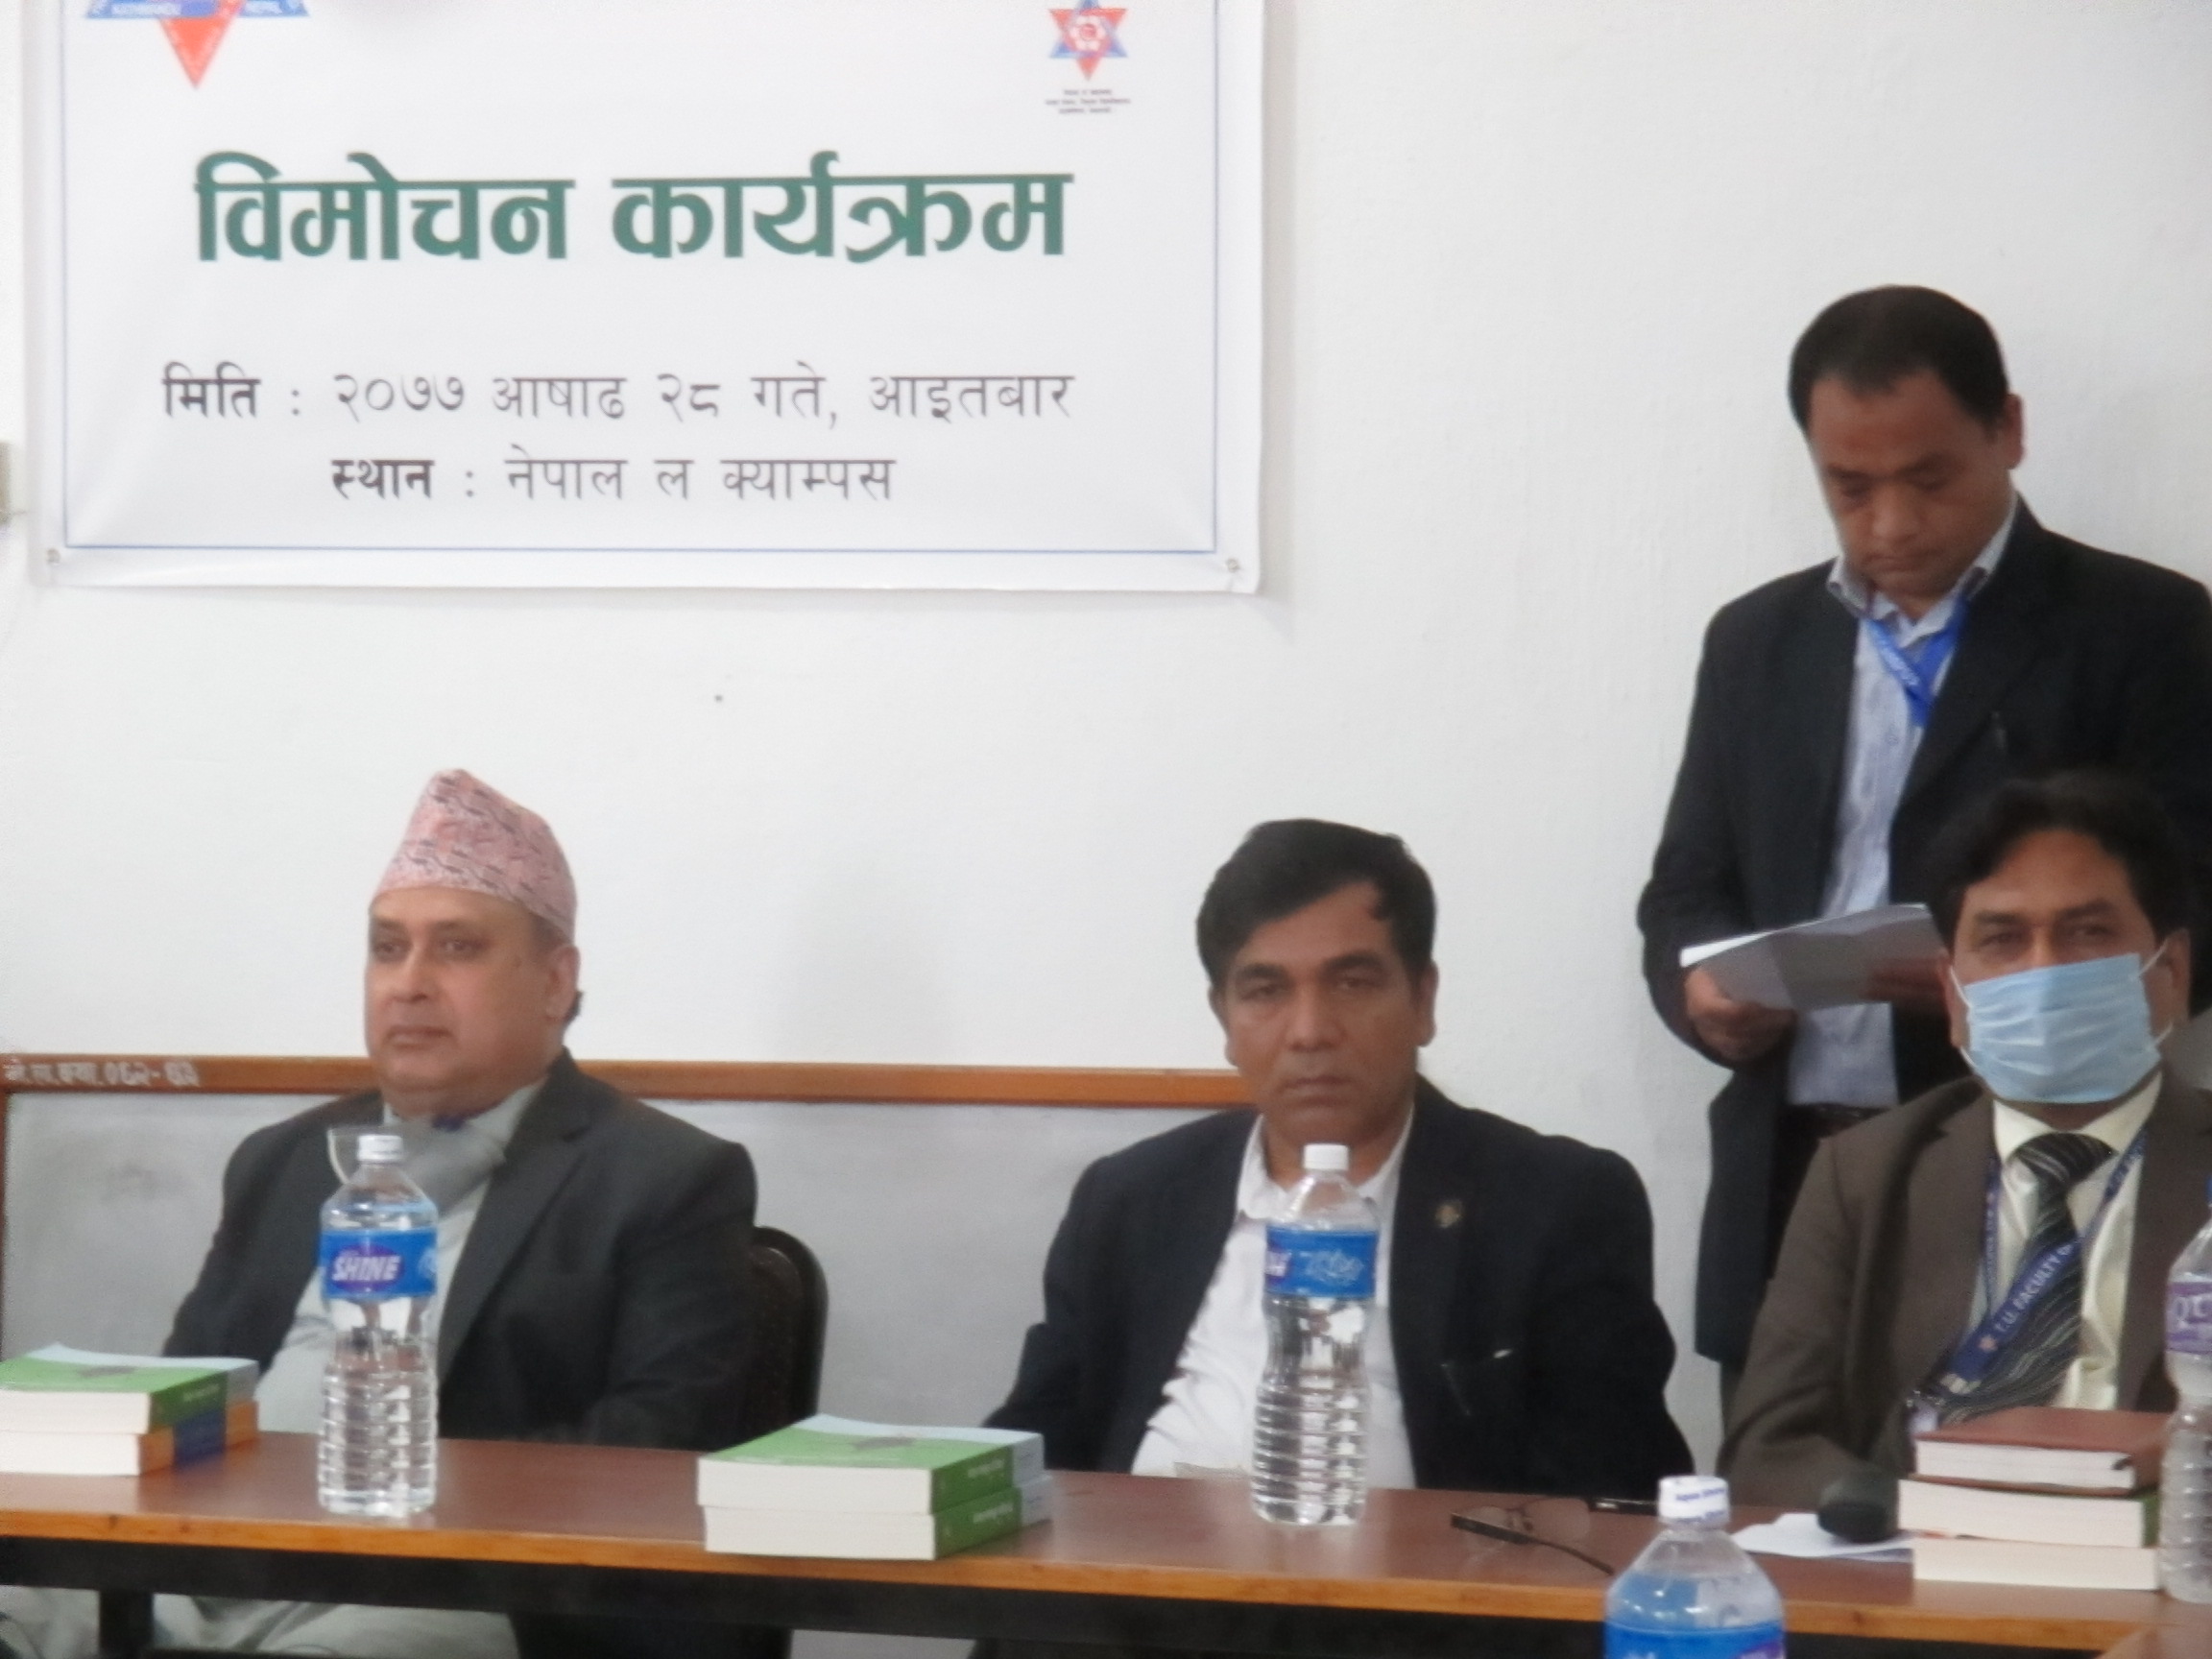 Nepal Kanoon Paricharcha Releases Ceremony